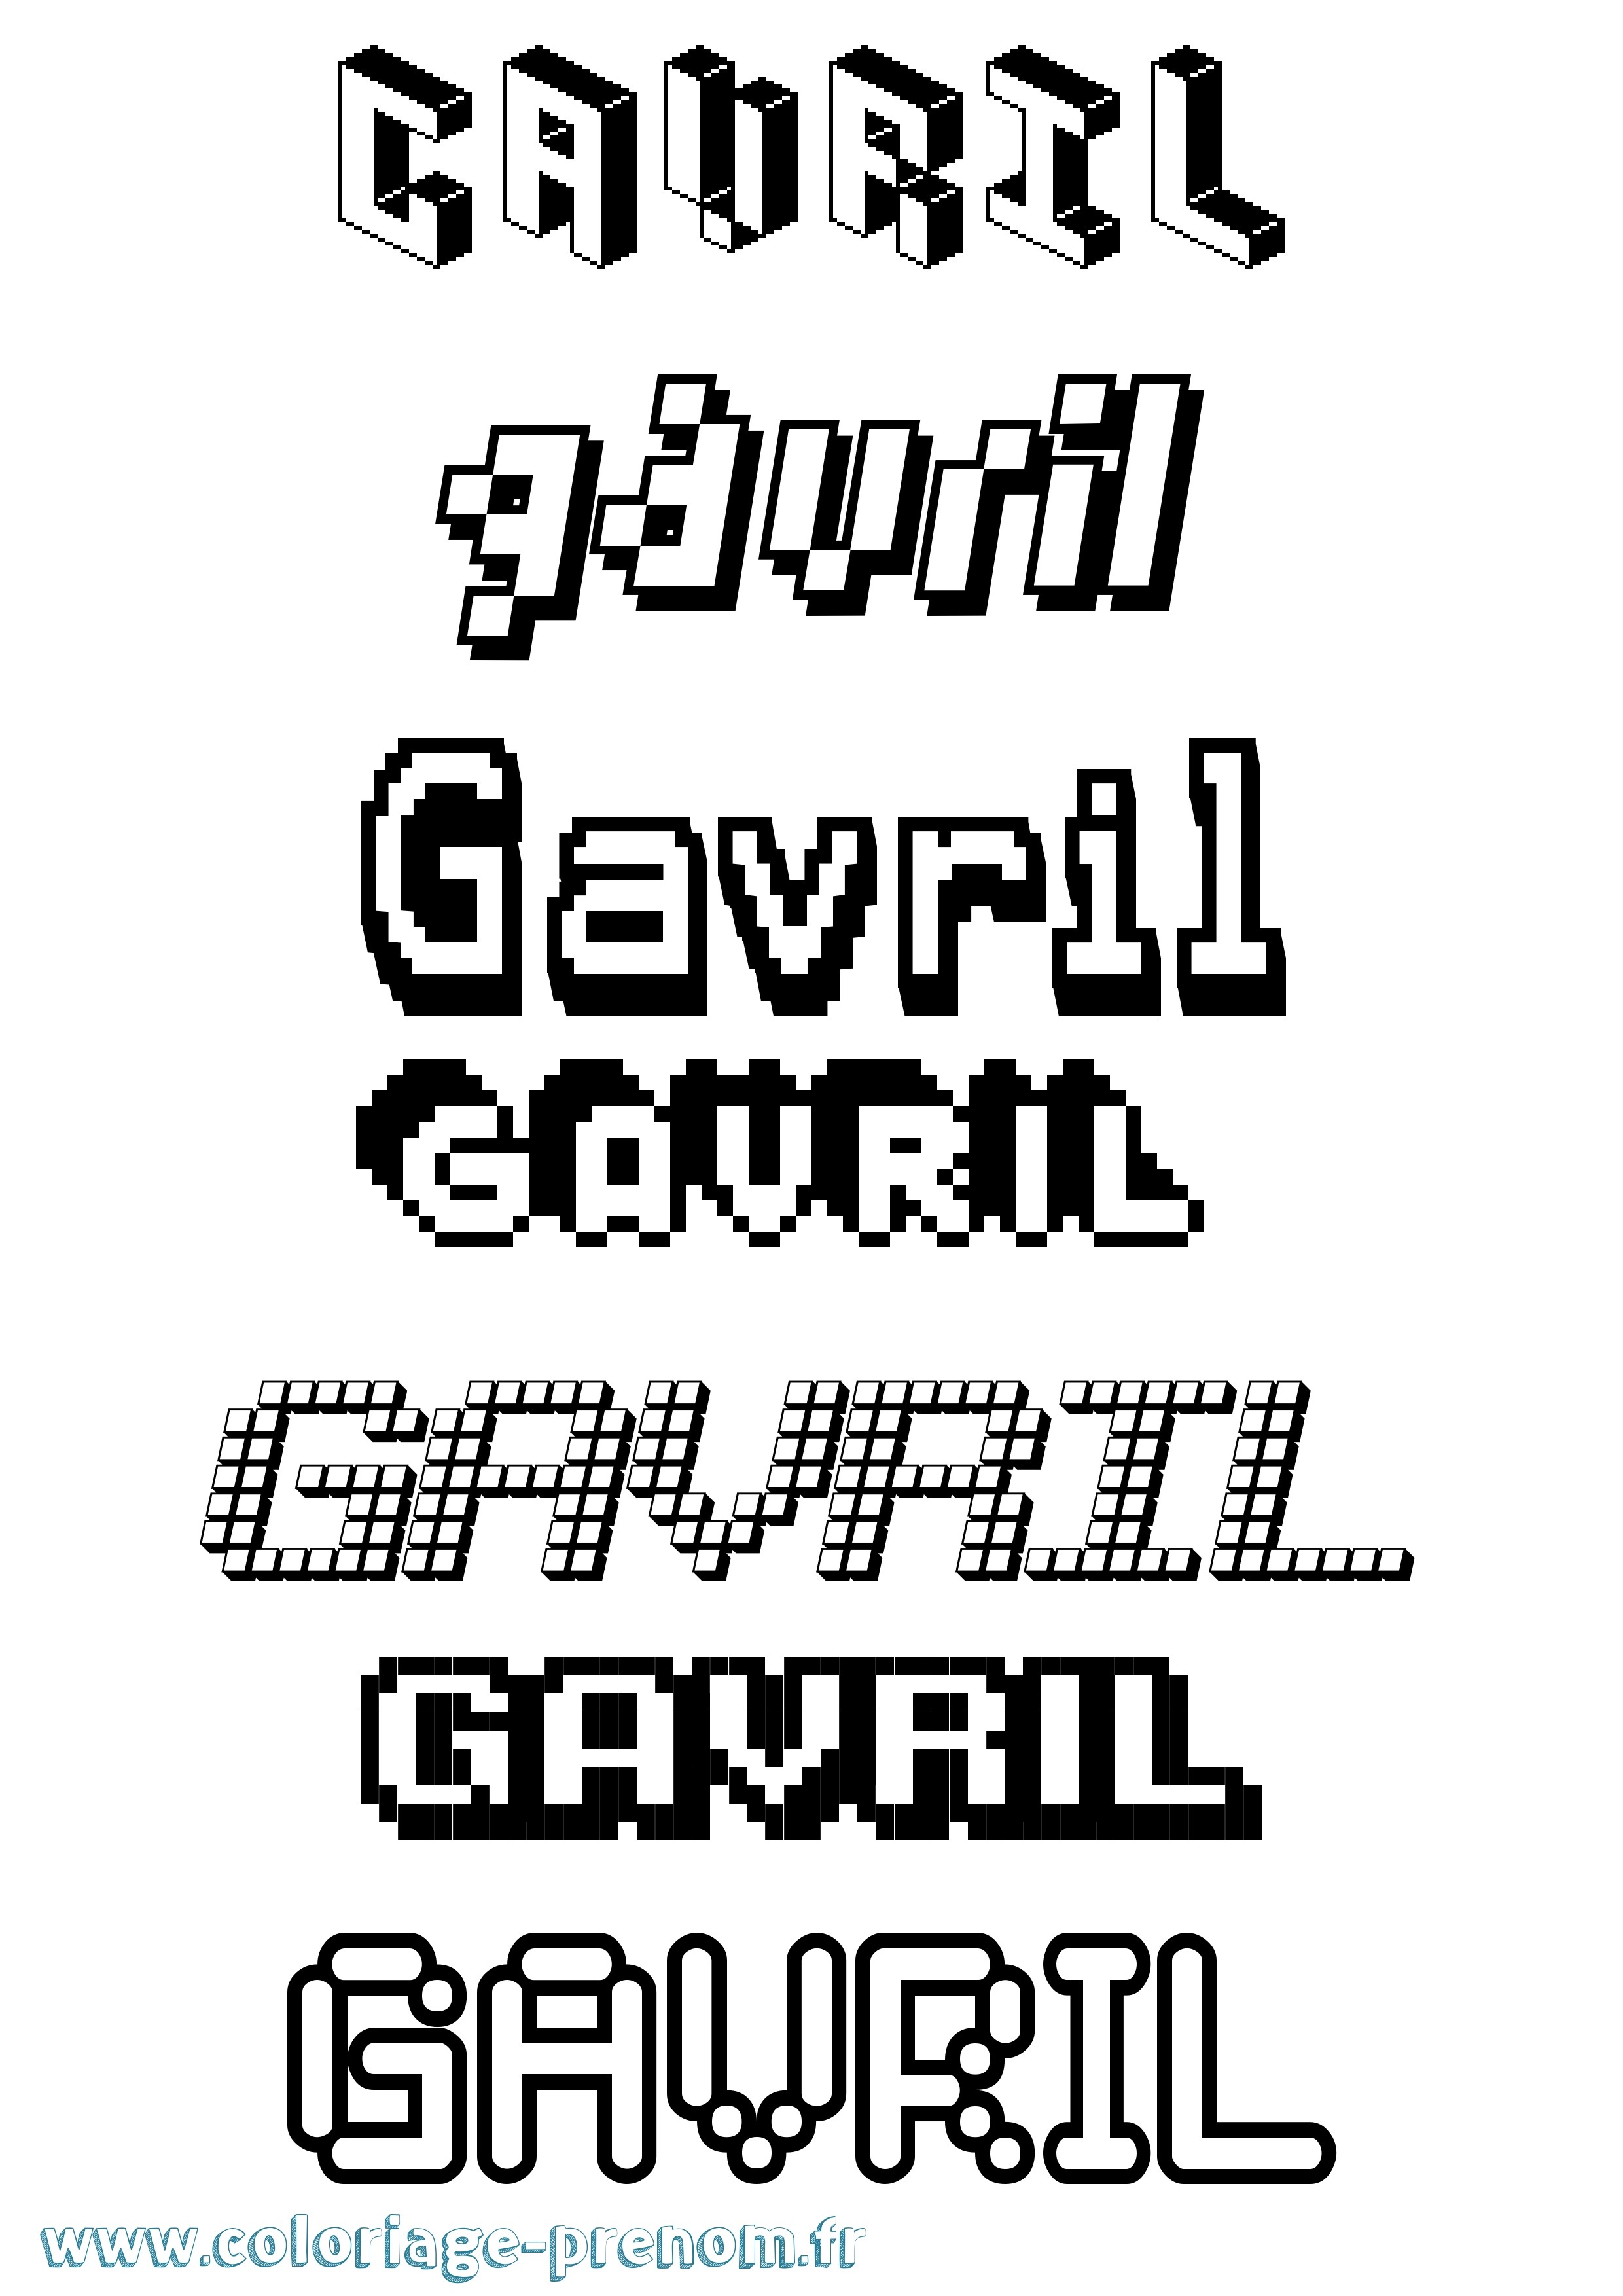 Coloriage prénom Gavril Pixel